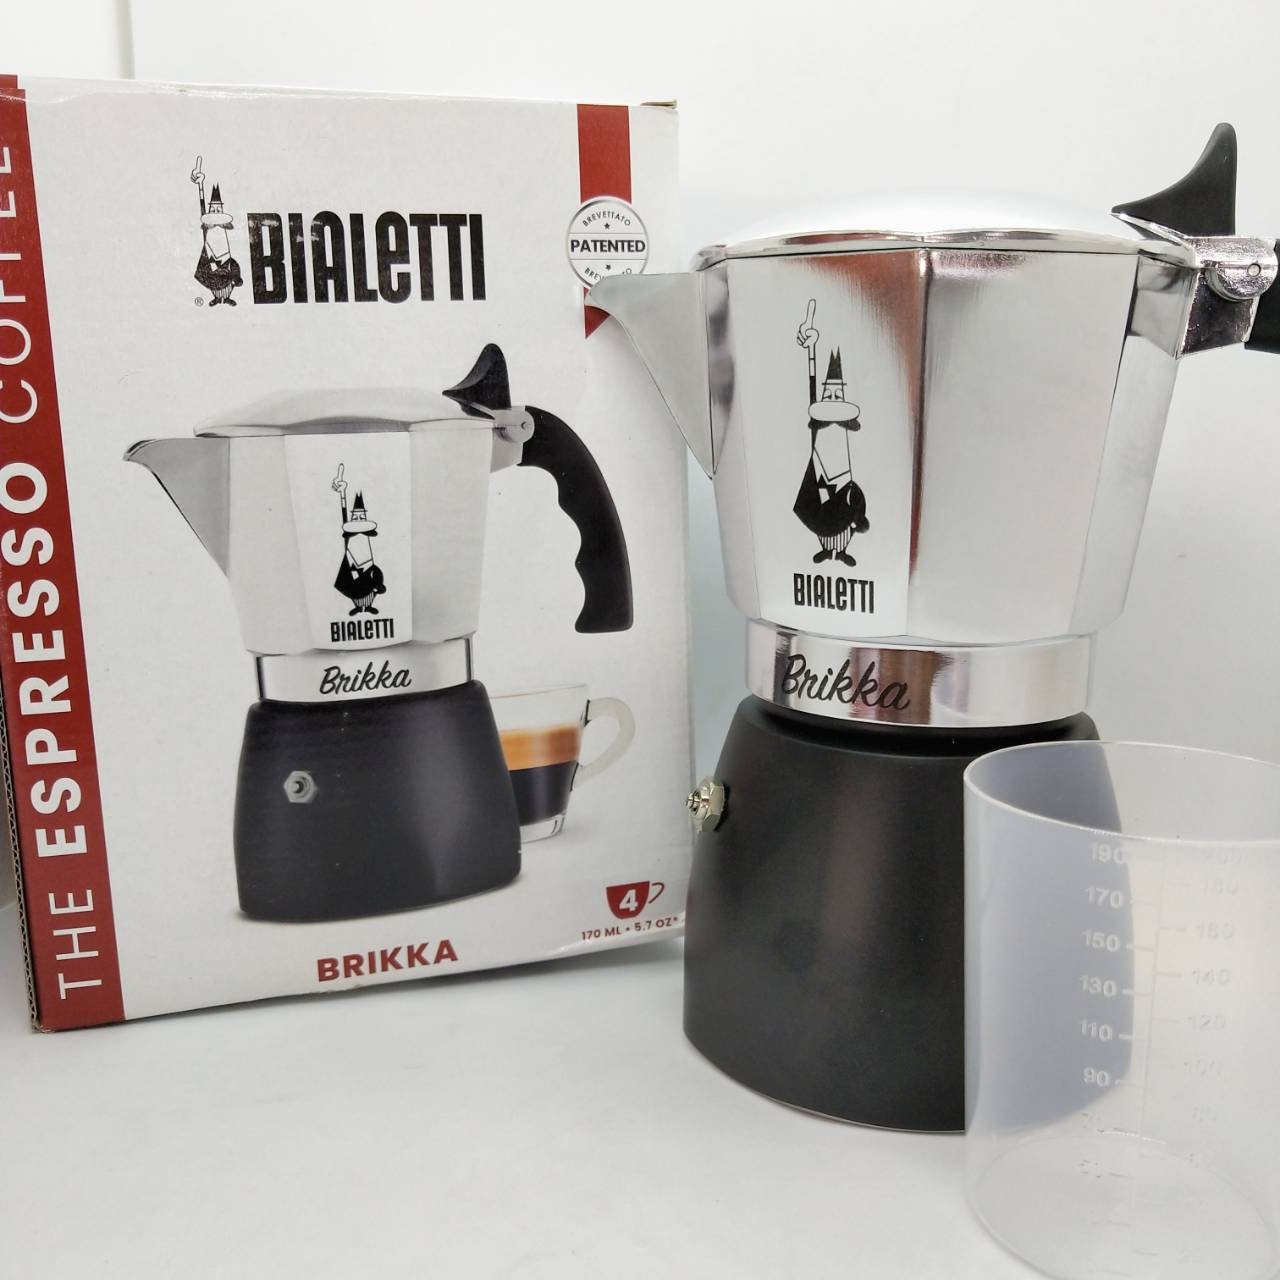 Bialetti brikka moka pot 2 cup 4 cup รุ่น 2020 หม้อต้มกาแฟ บริกก้า New Brikka